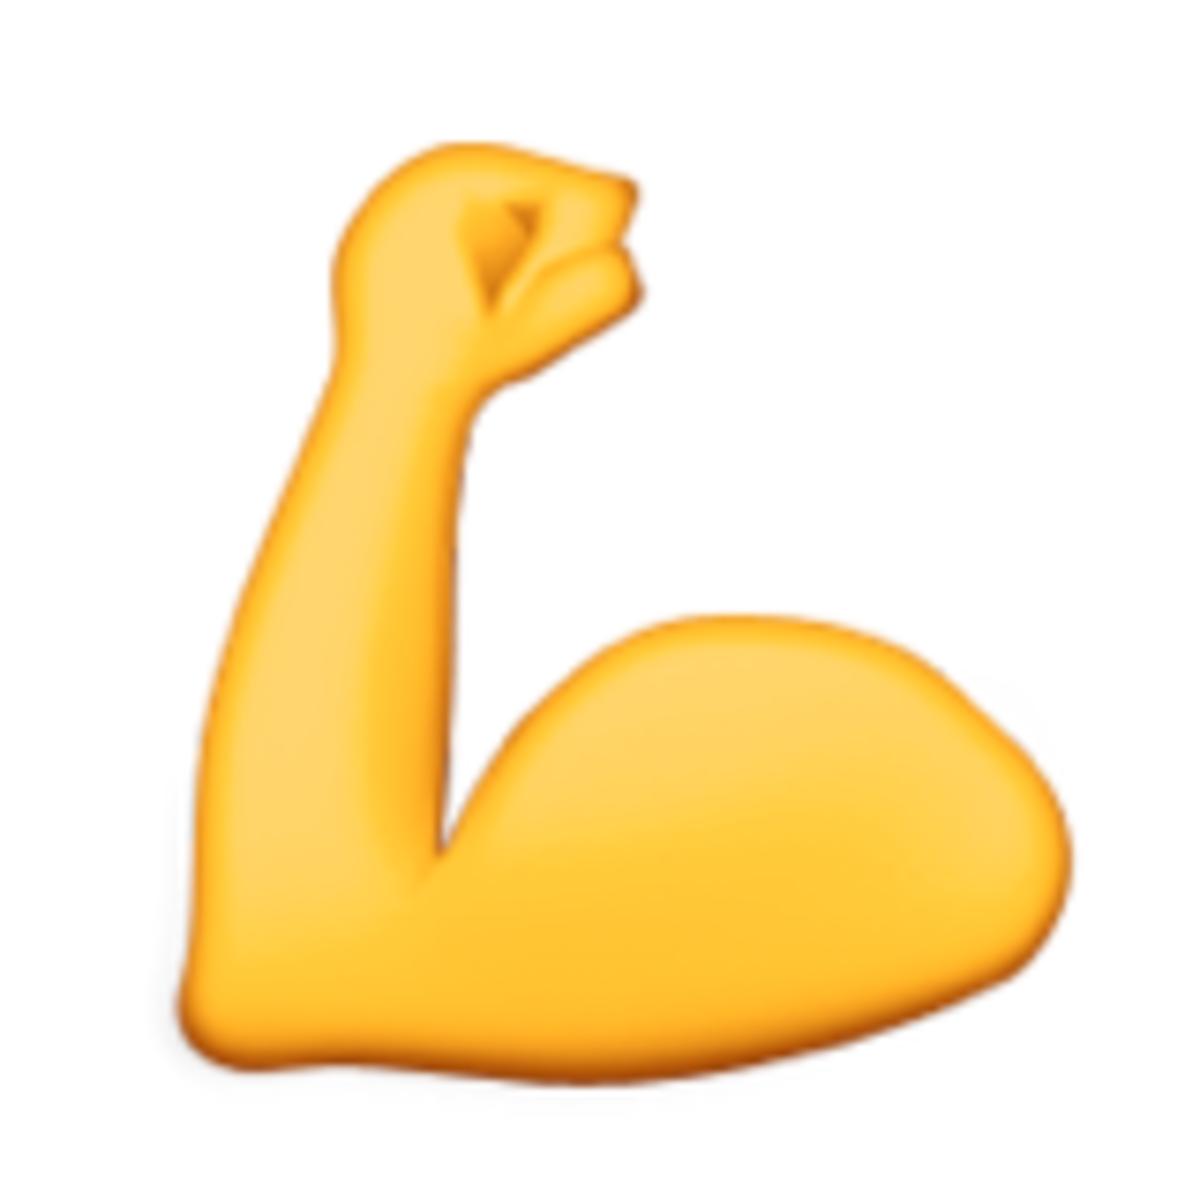 1f4aa-flexed-biceps-apple-new-2015.png